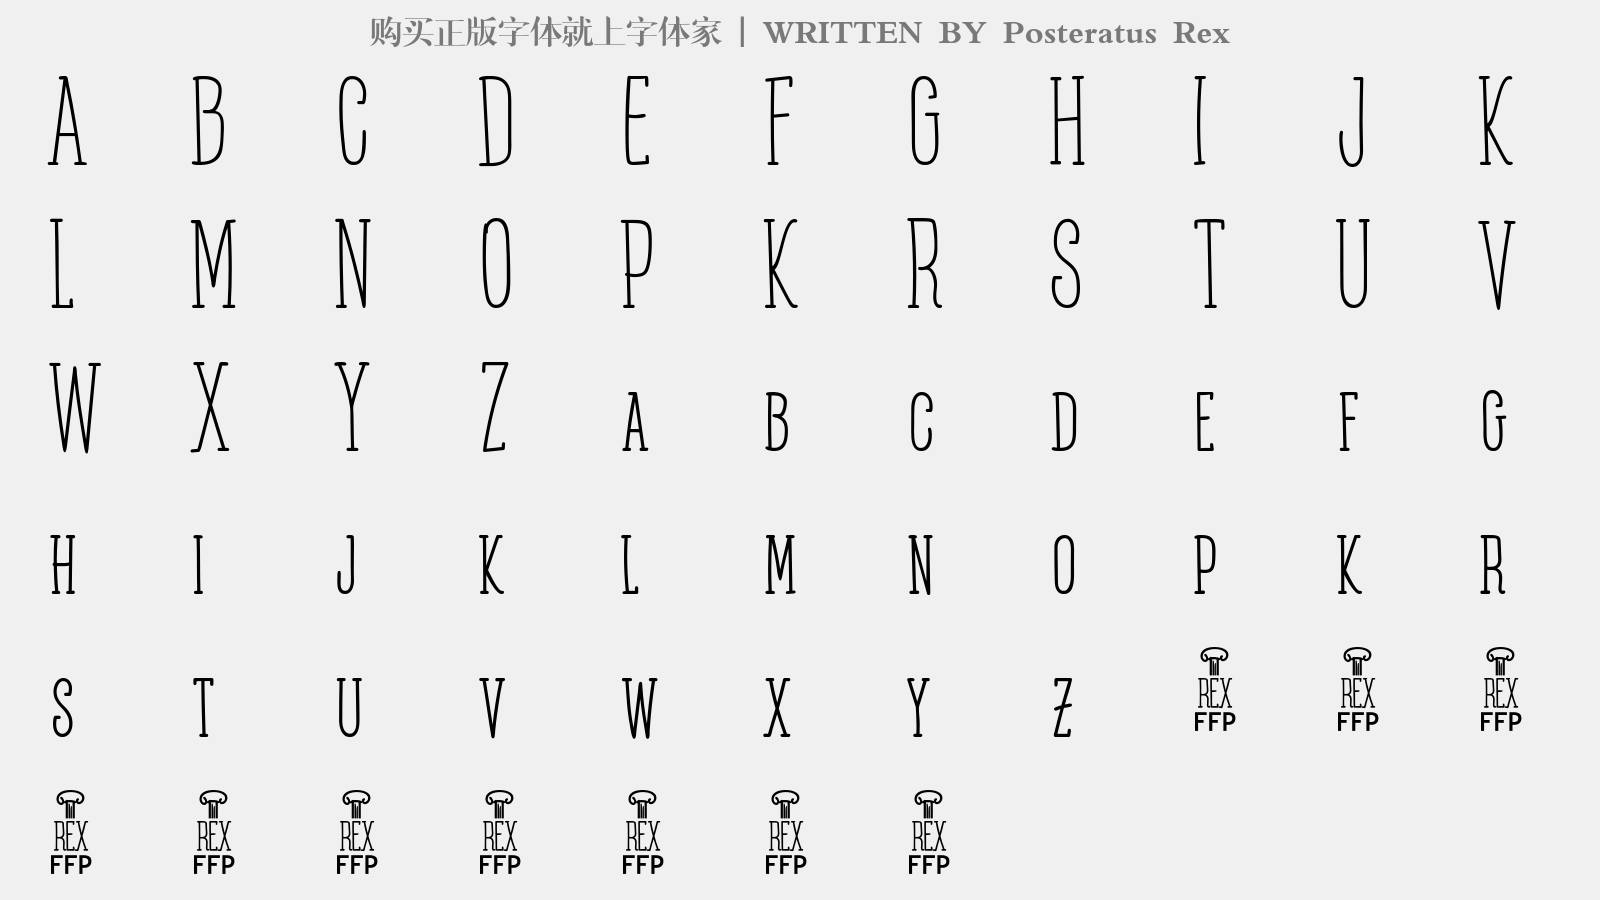 Posteratus Rex - 大写字母/小写字母/数字